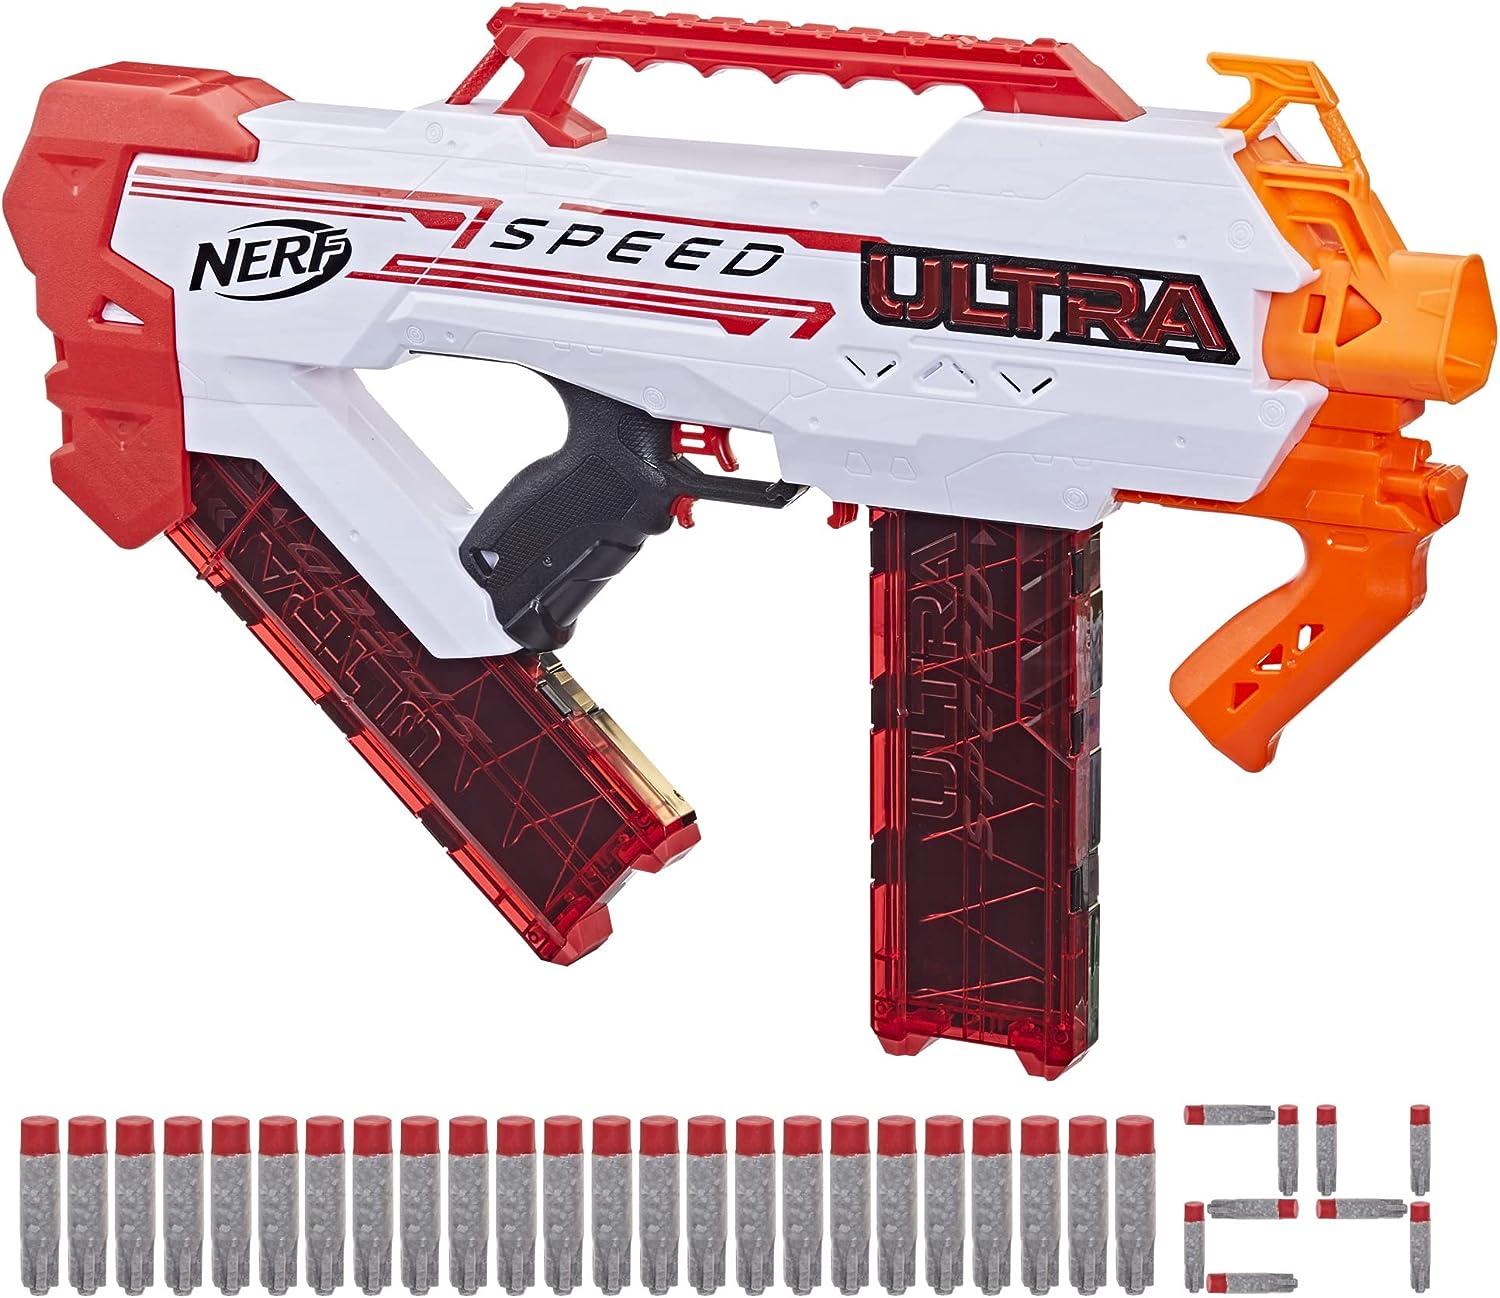 NERF Ultra Speed Fully Motorized Blaster, Fastest Firing Ultra Blaster, 24 AccuStrike Ultra Darts, Uses Only Ultra Darts